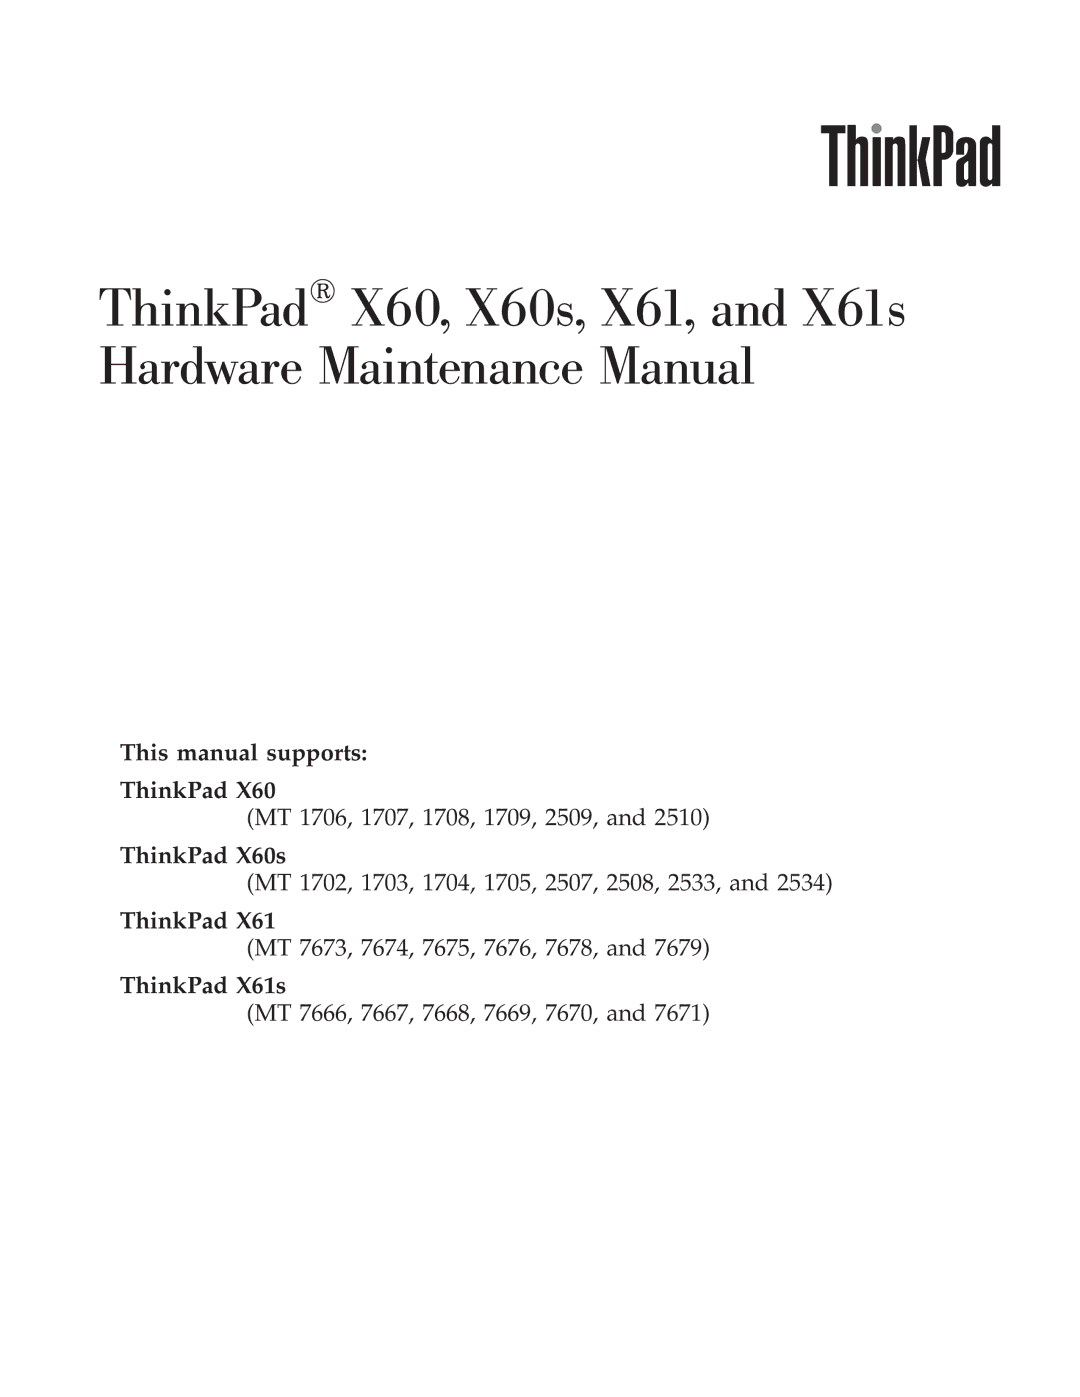 Lenovo X61S manual This manual supports ThinkPad 